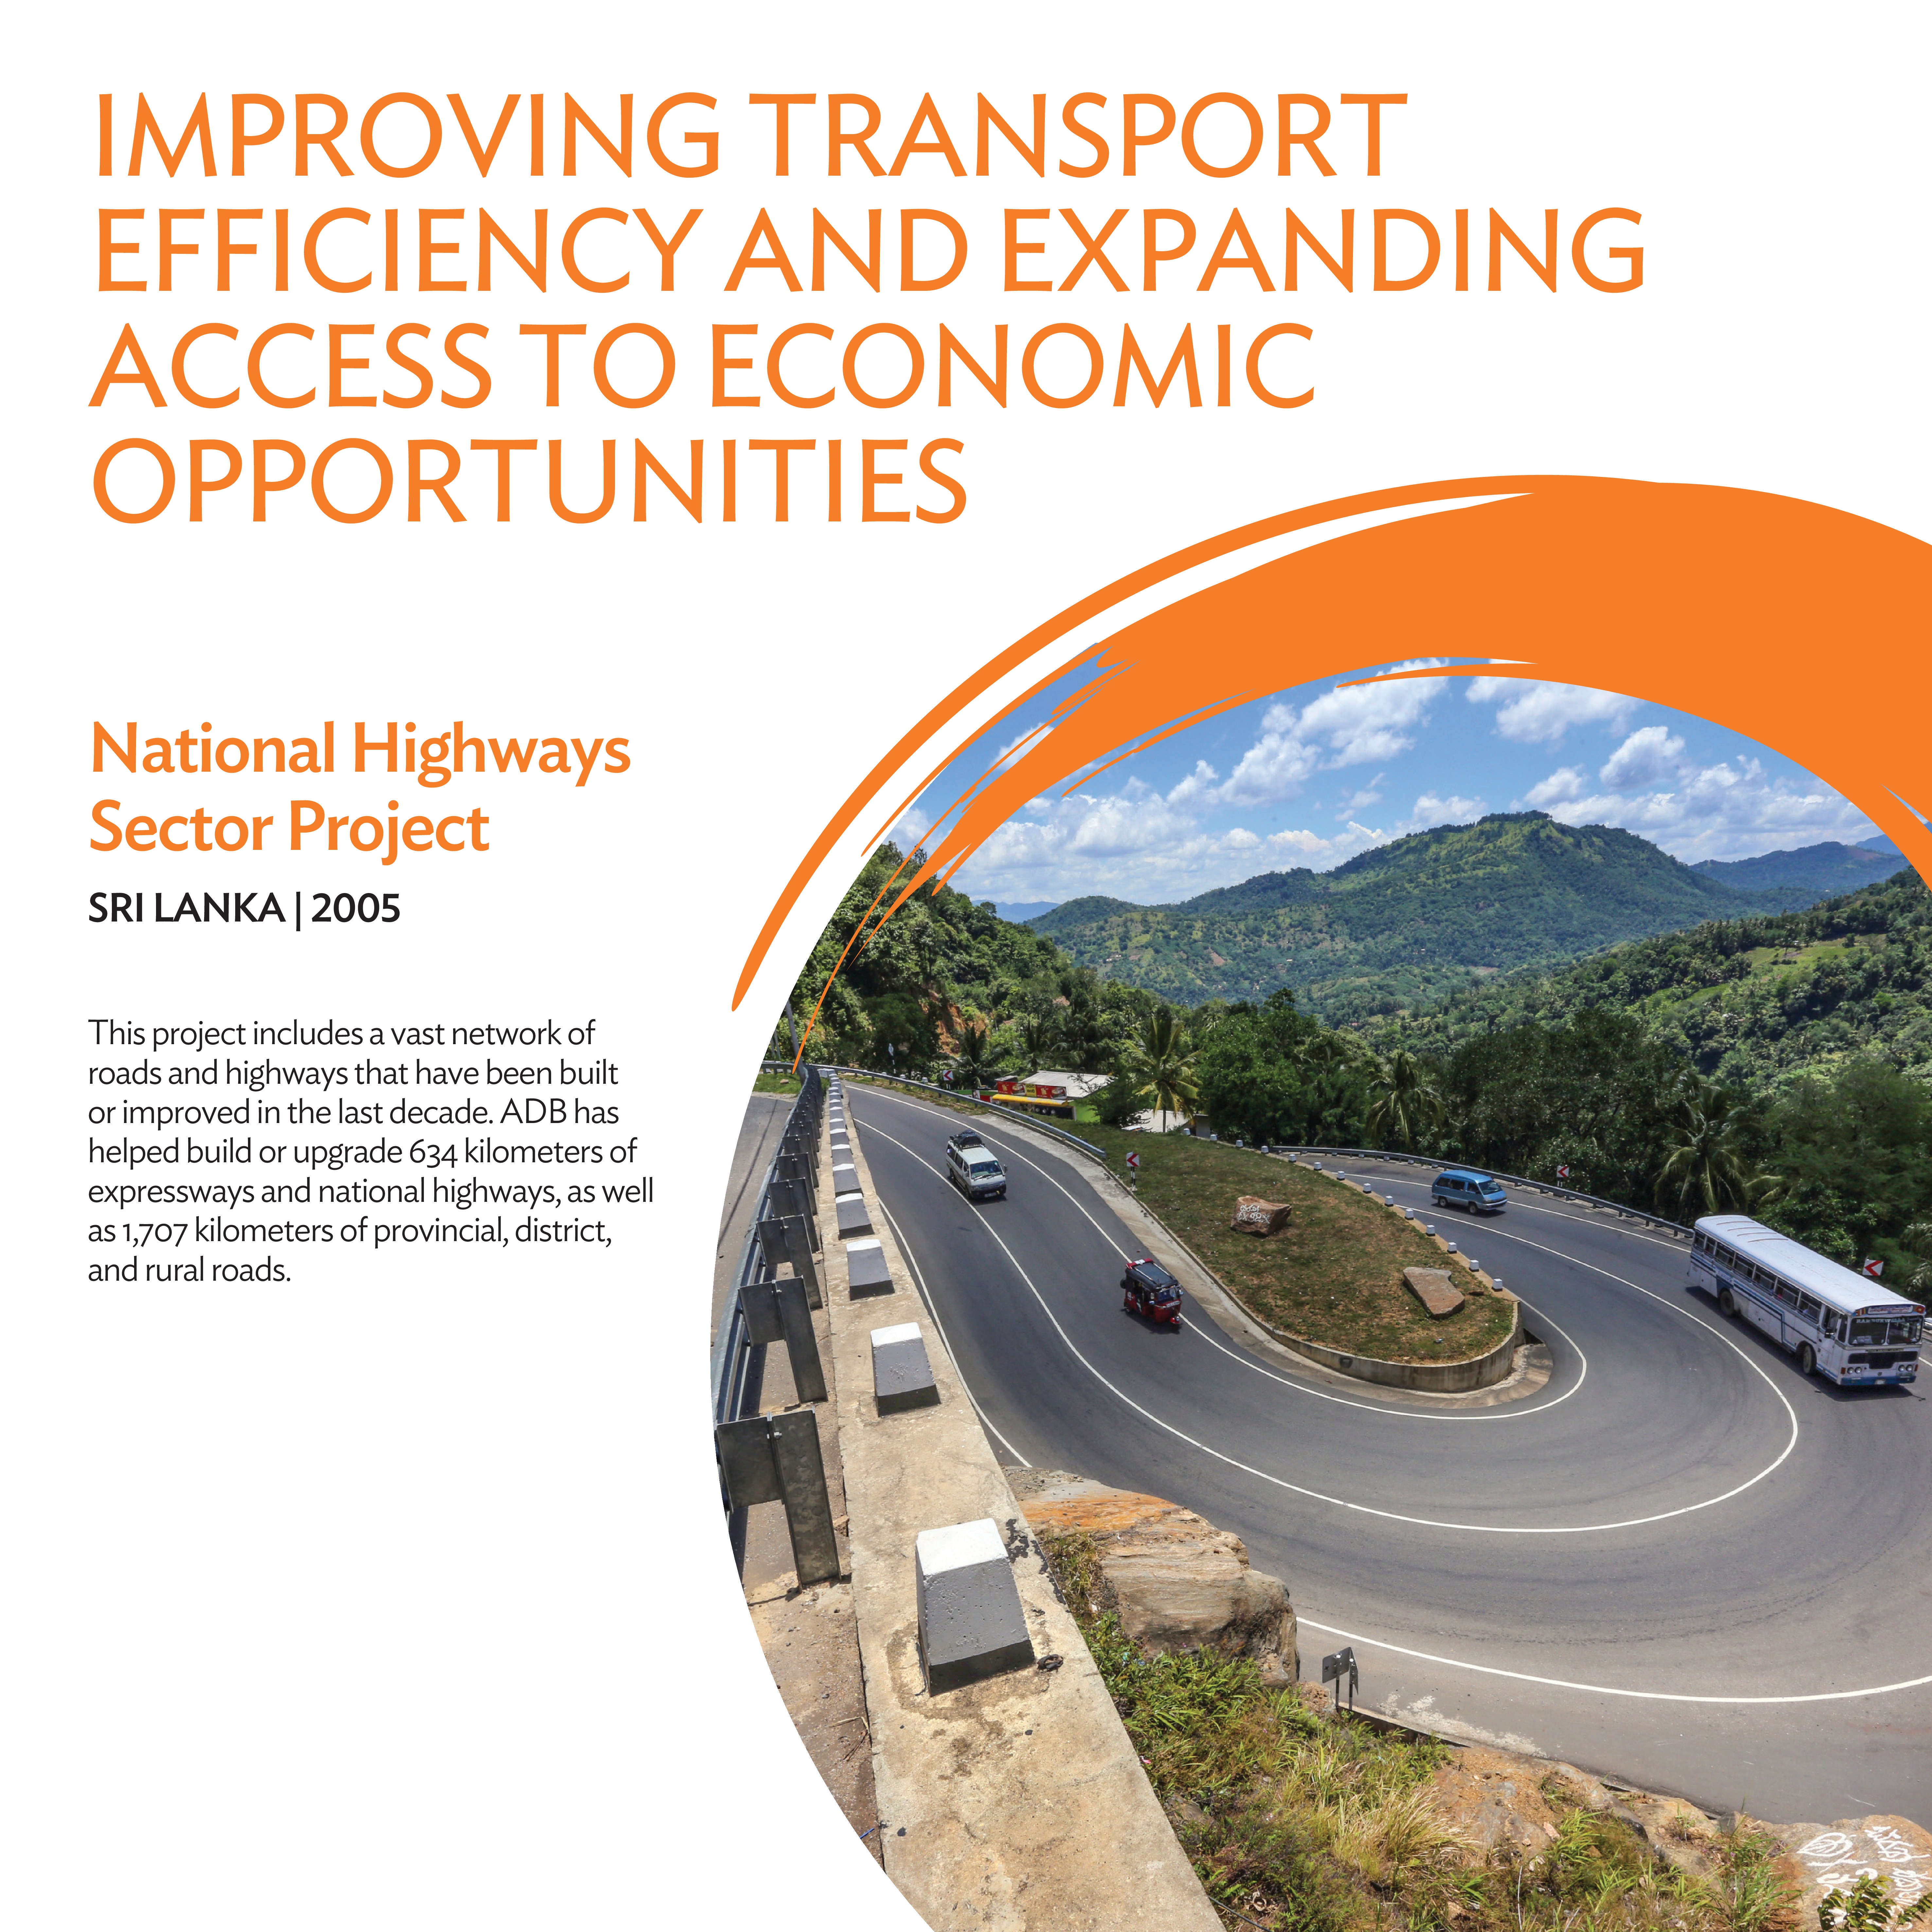 National Highways Sector Projekt, Sri Lanka, 2005